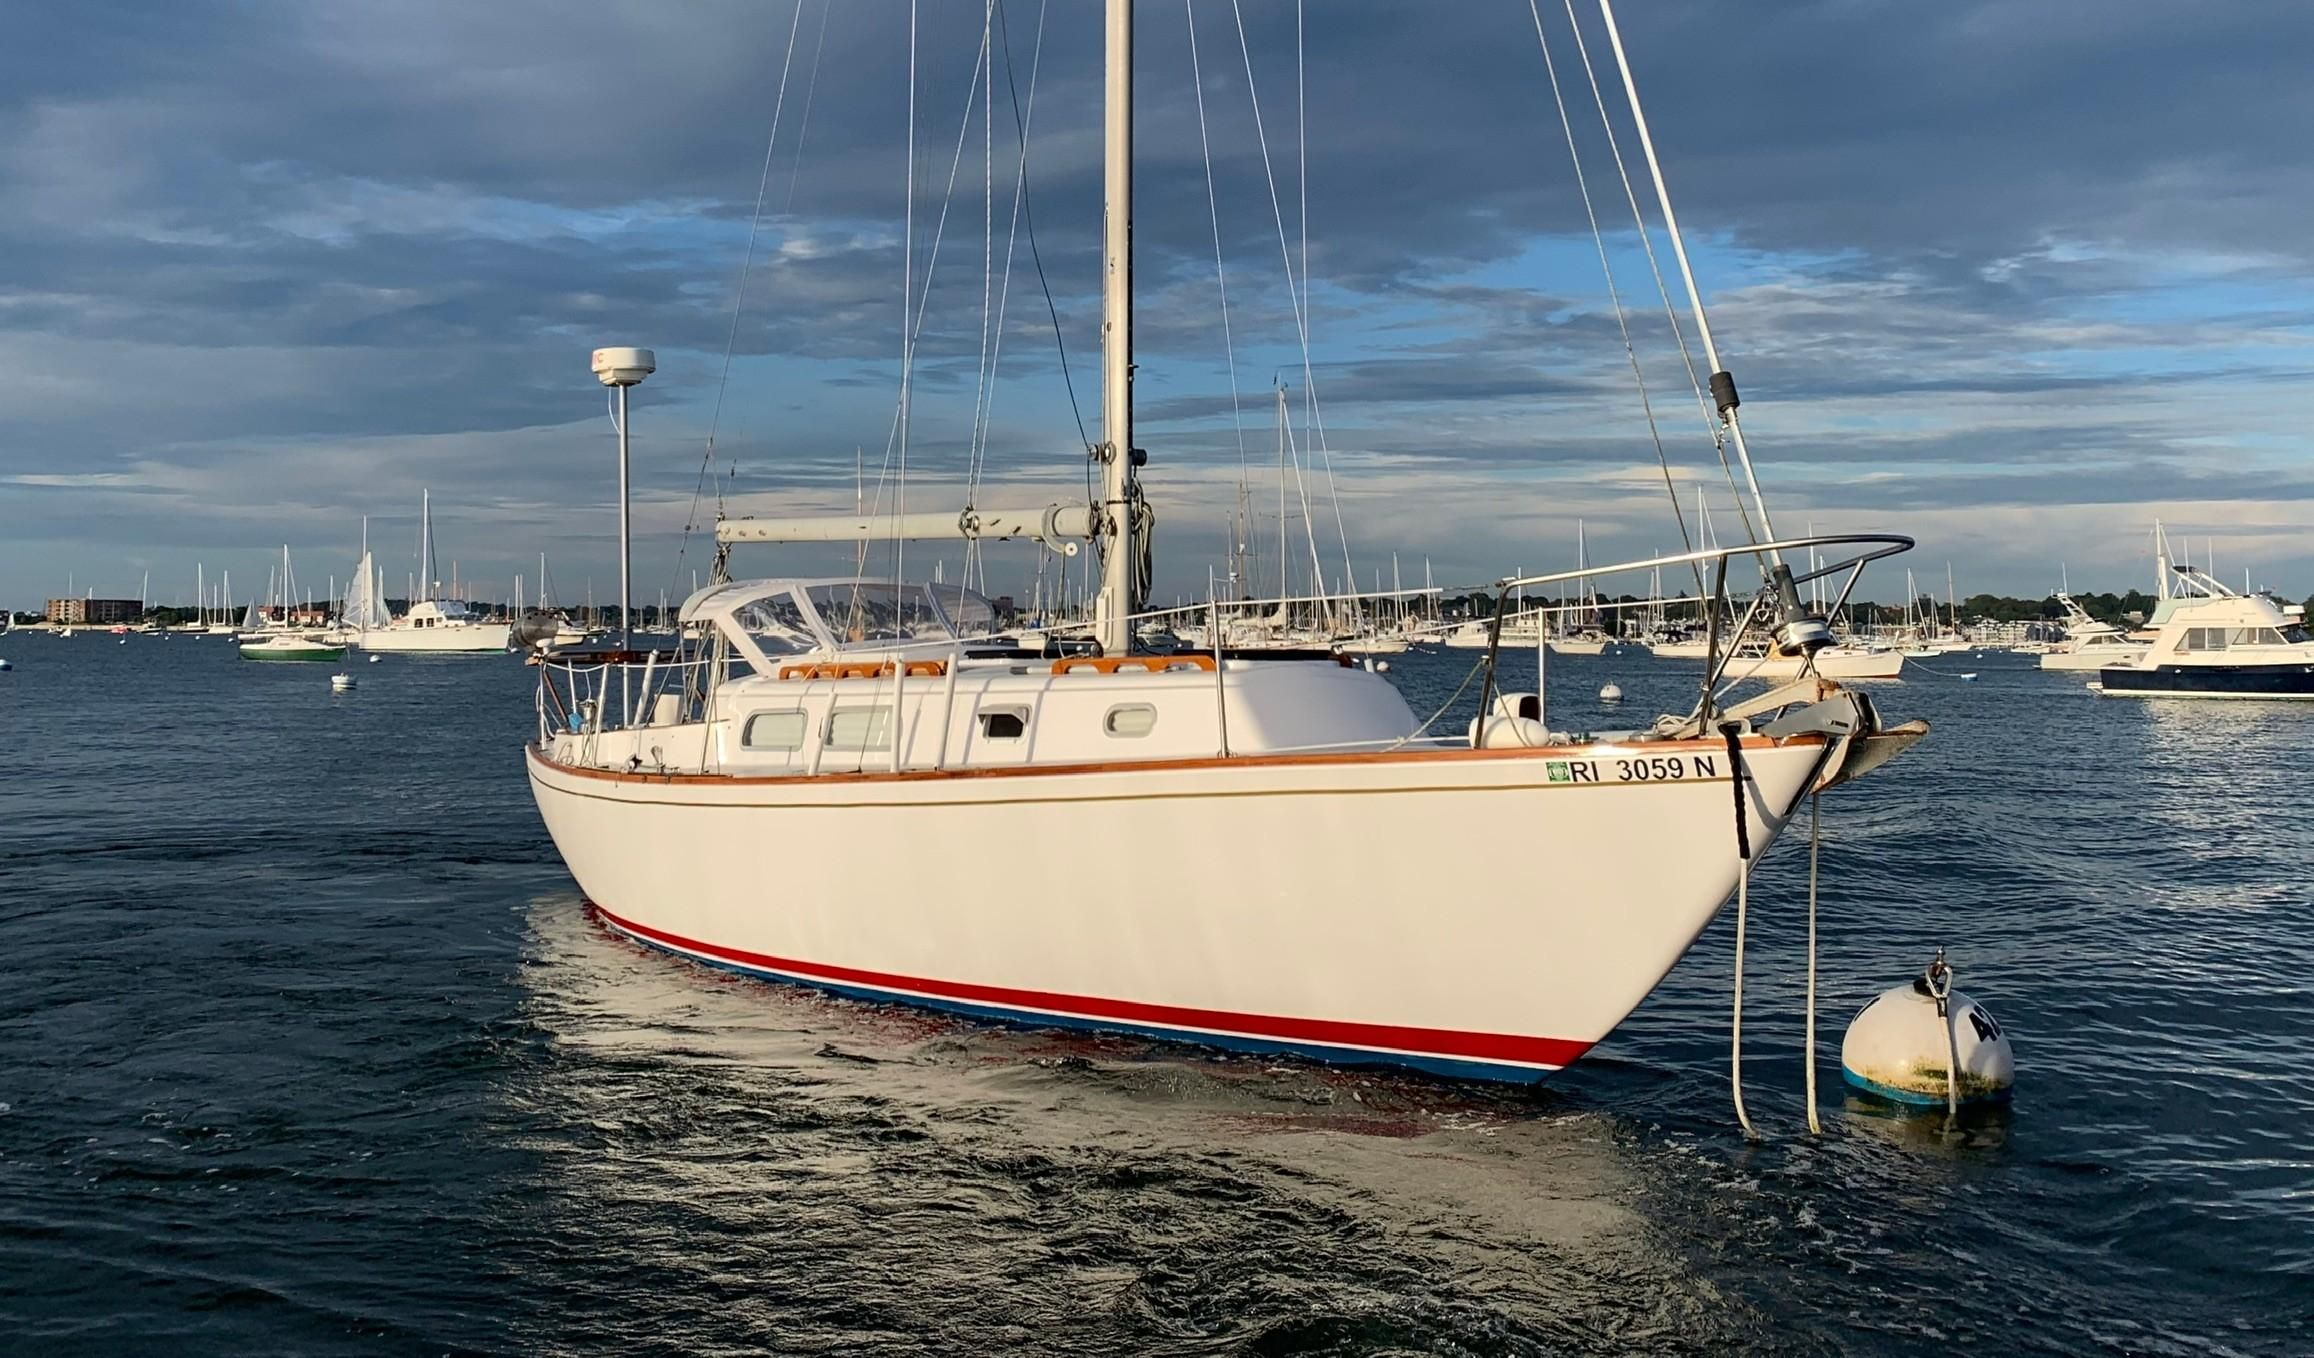 pearson 35 sailboat